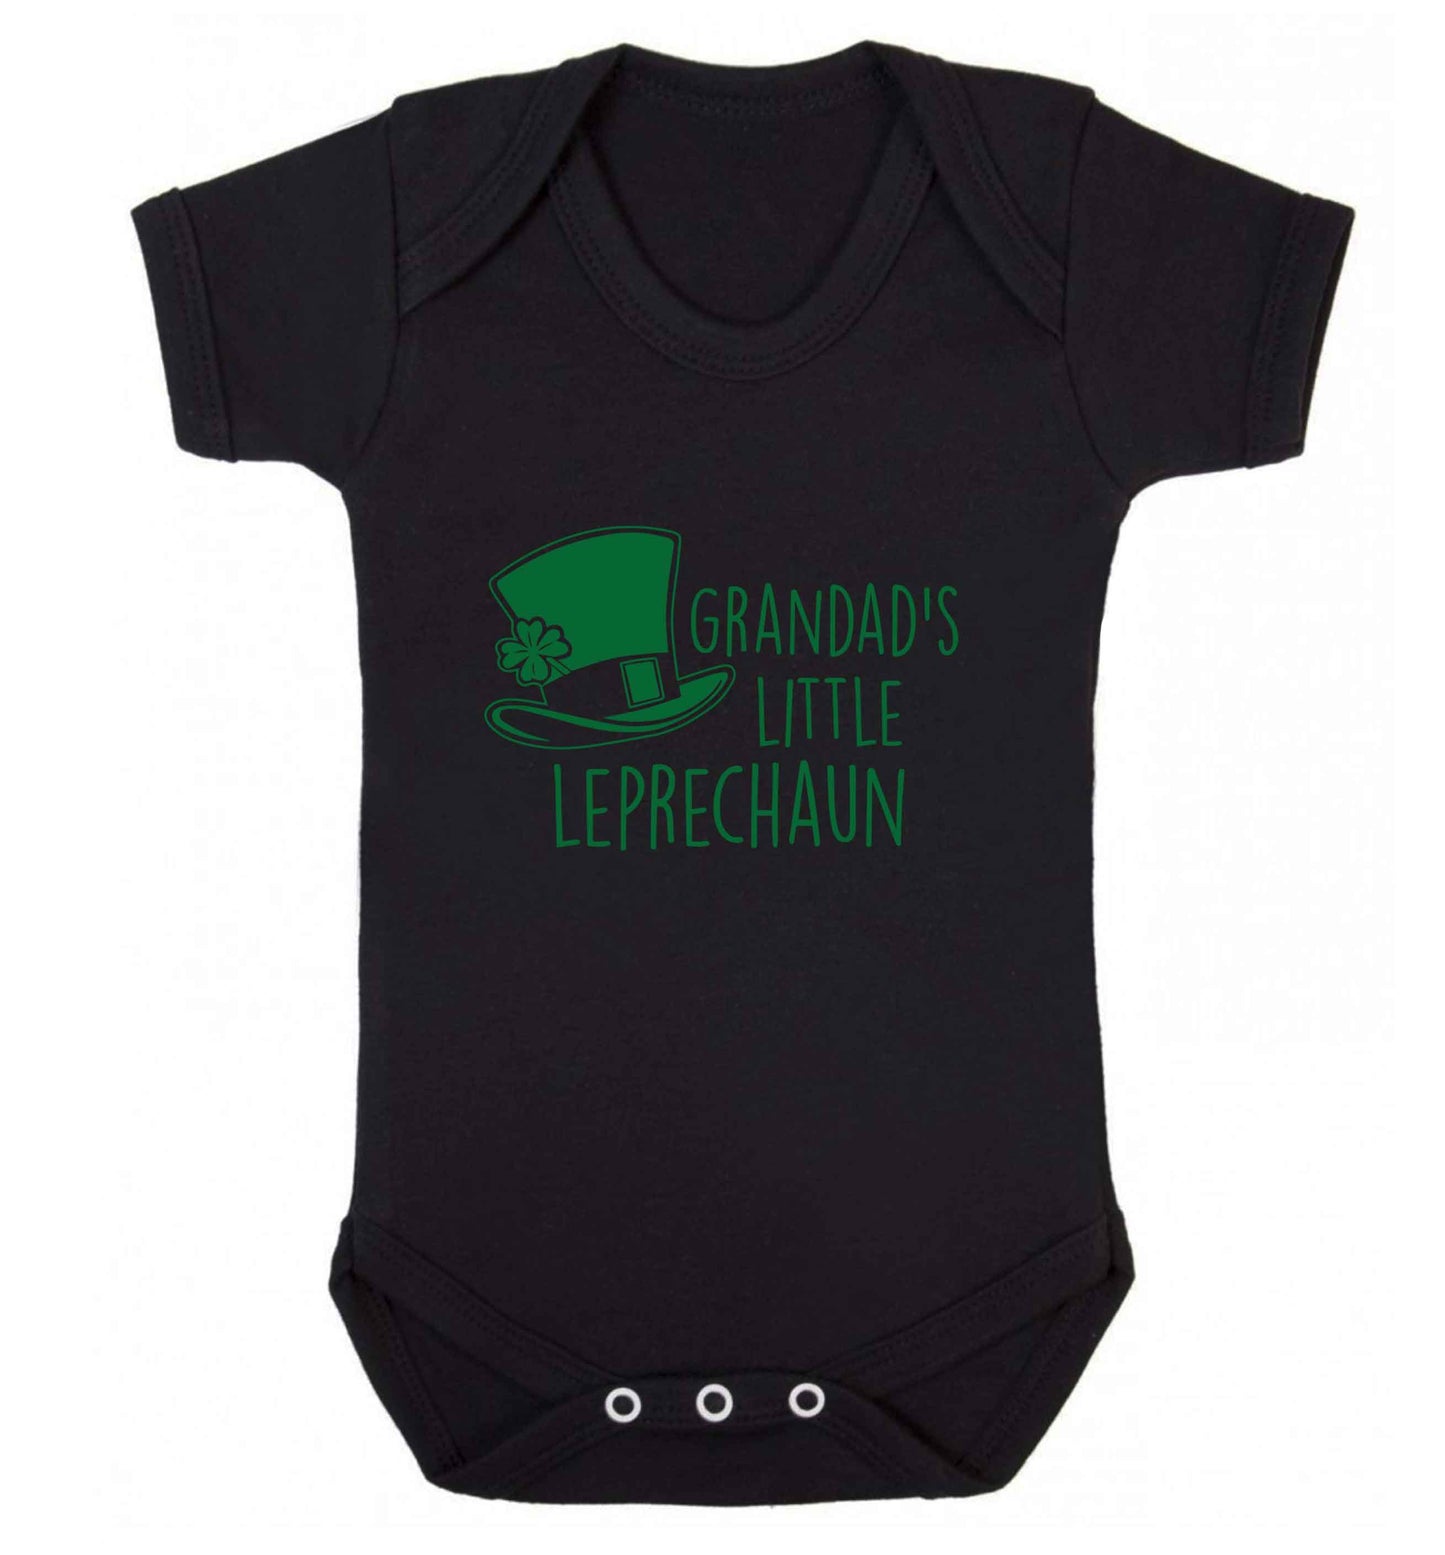 Grandad's little leprechaun baby vest black 18-24 months